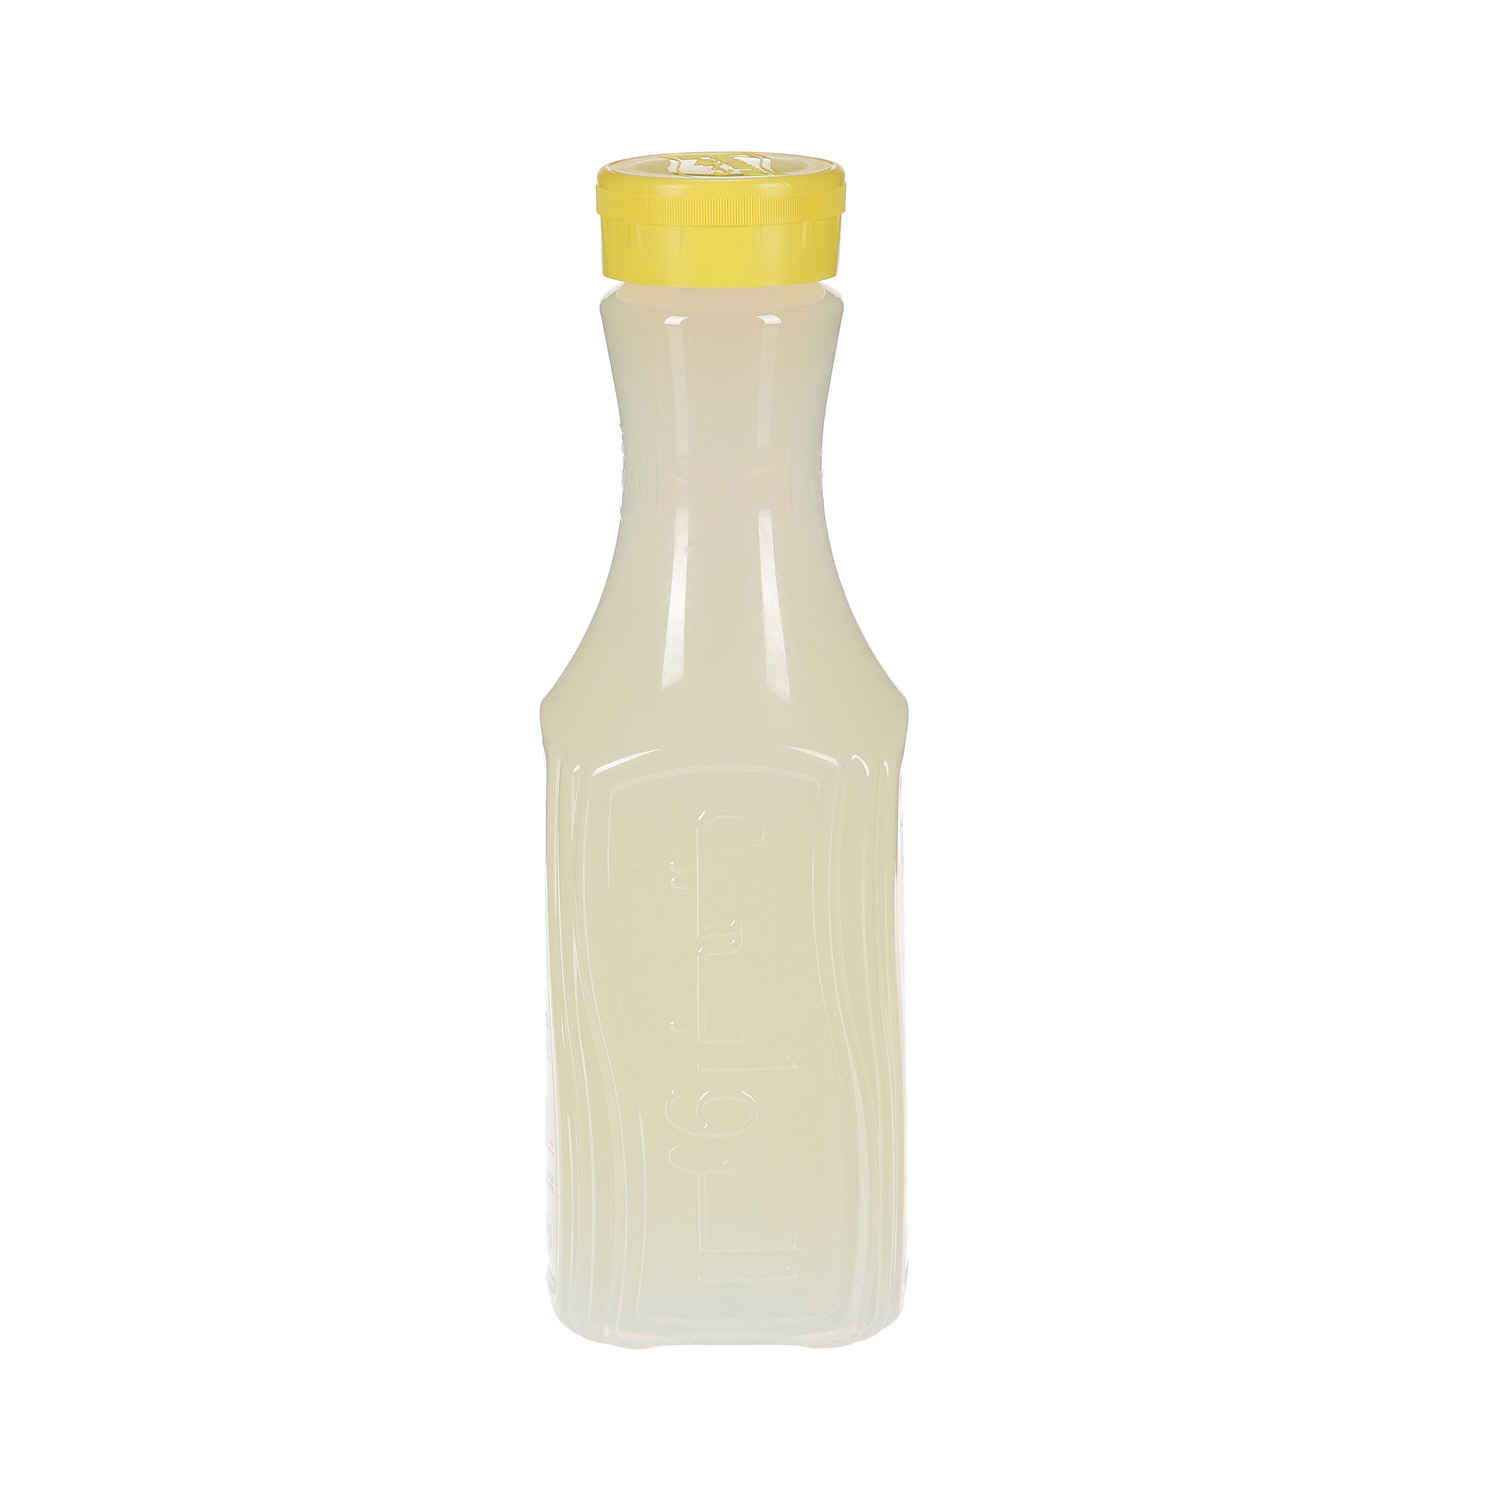 Al Rawabi Lemon Juice 1 Ltr